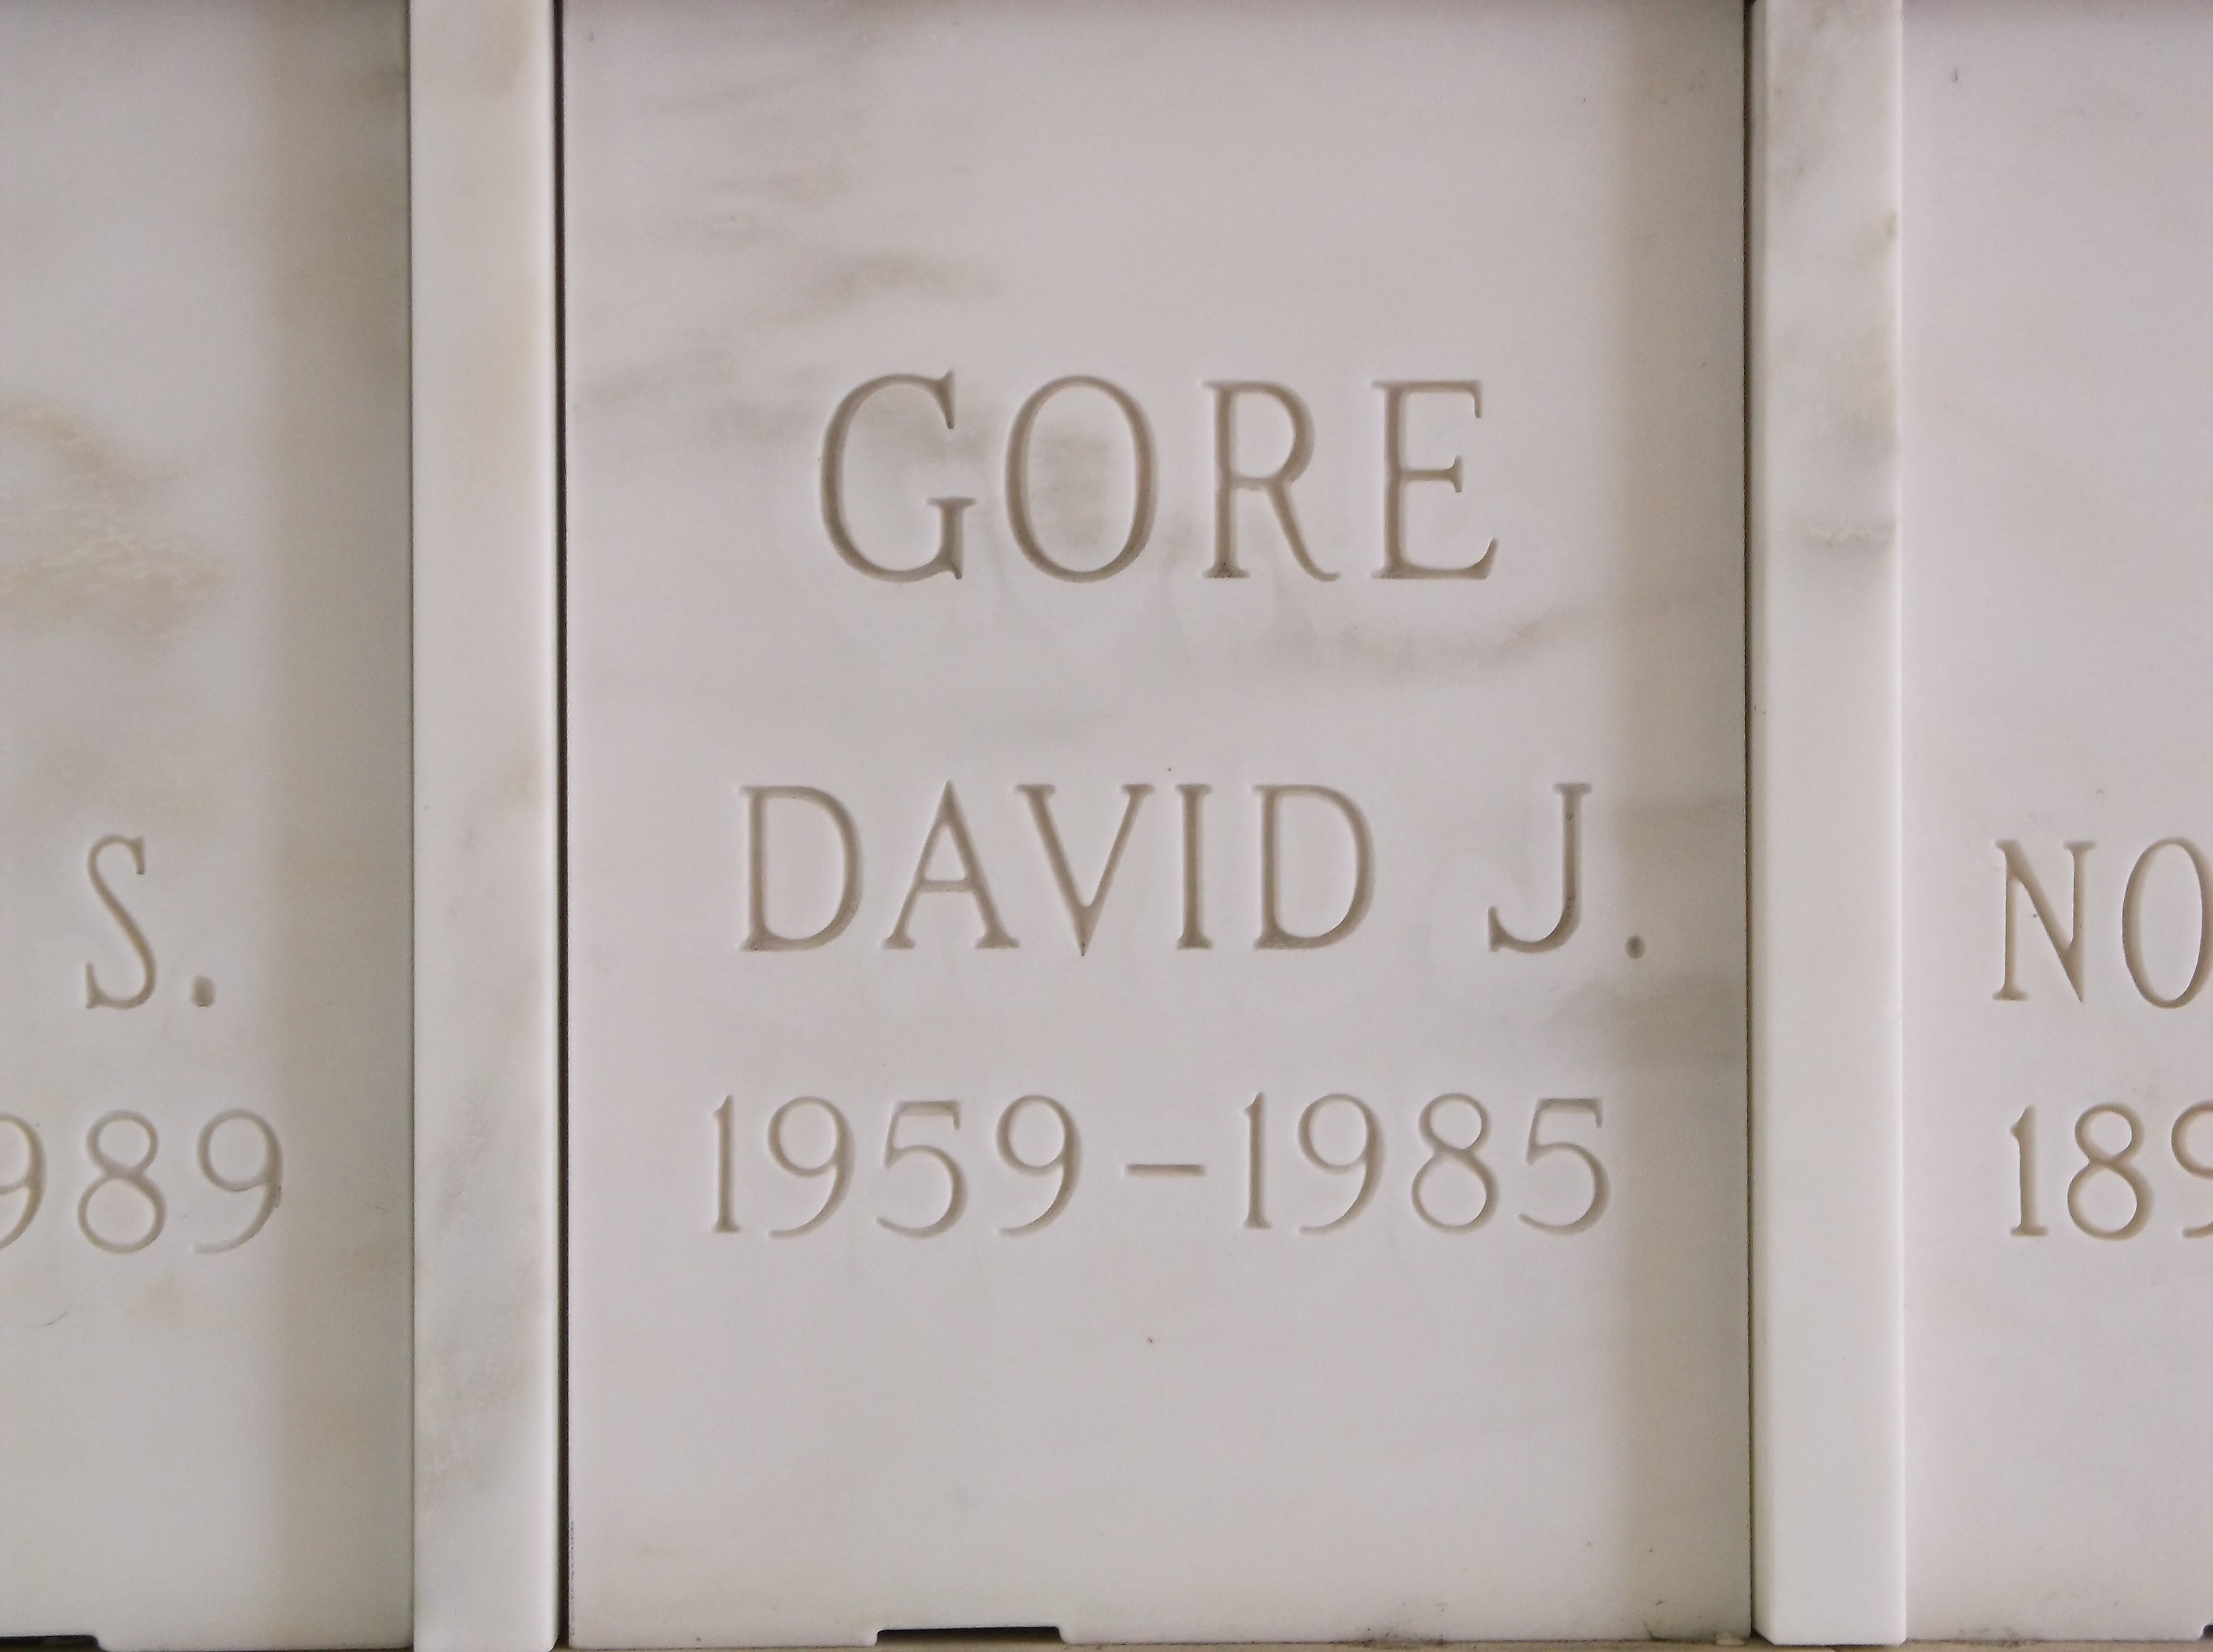 David J Gore